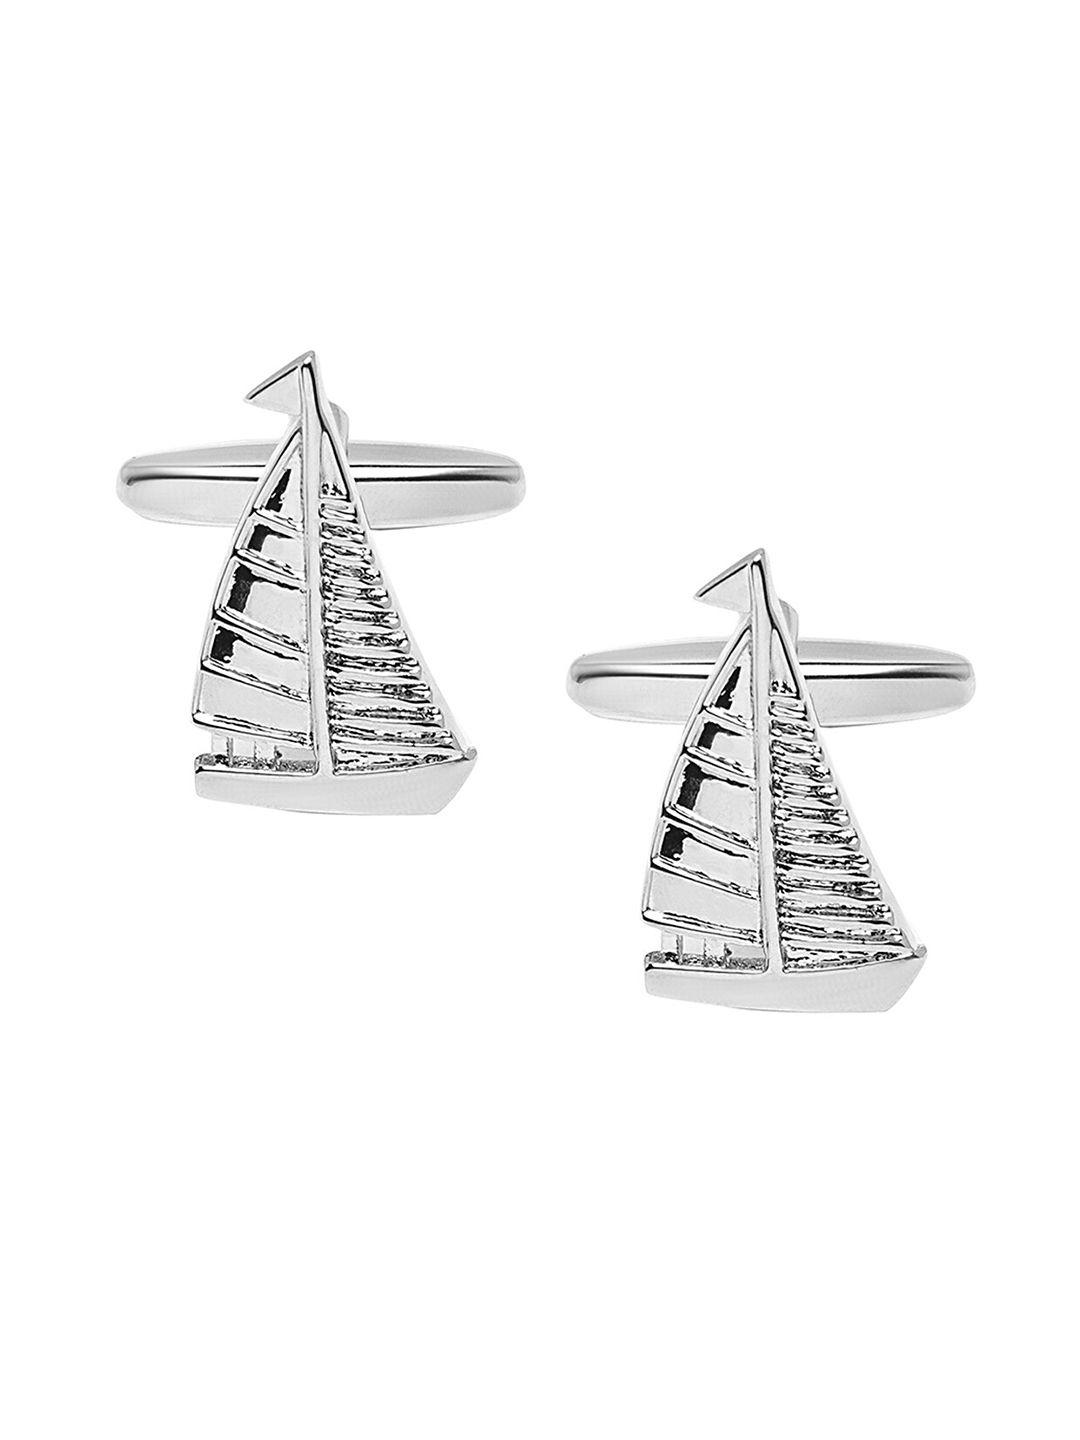 bodha silver-plated sail boat shaped cufflink